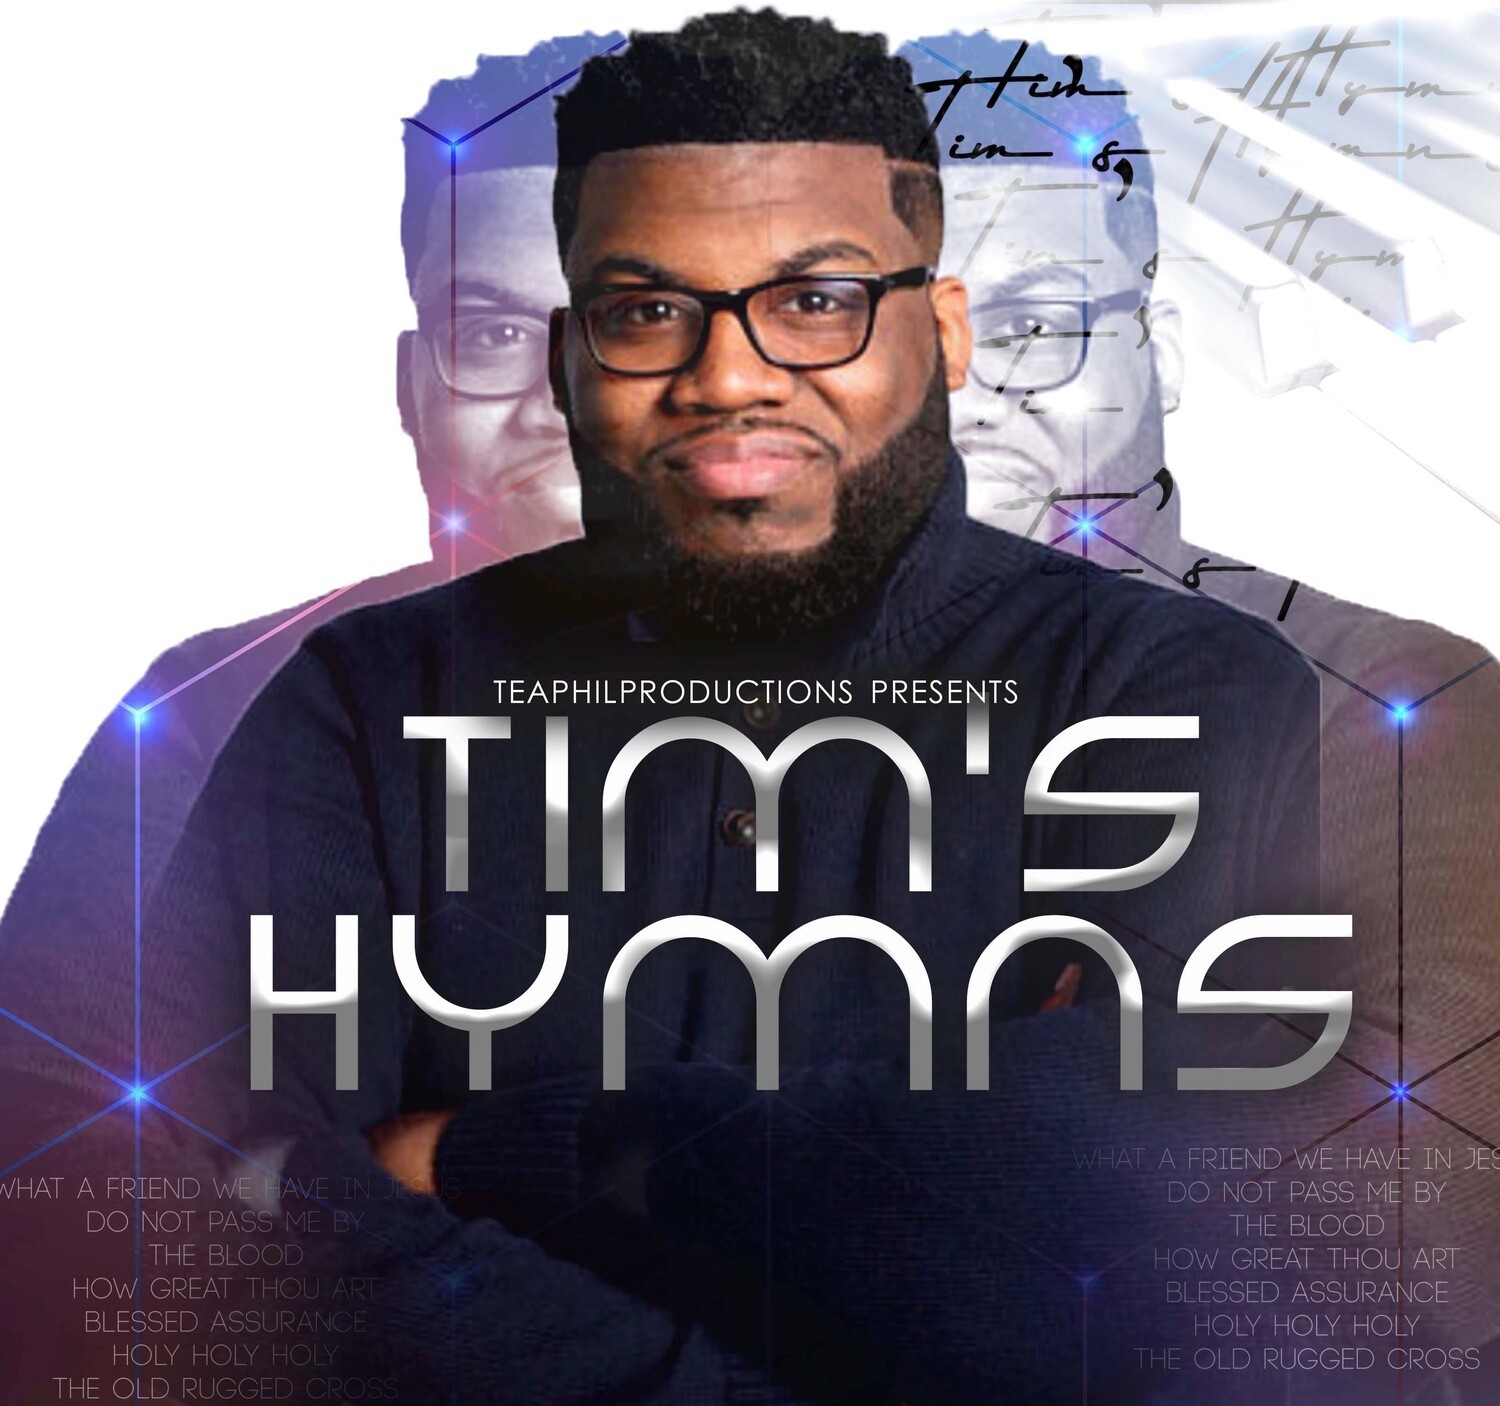 Tim's Hymns